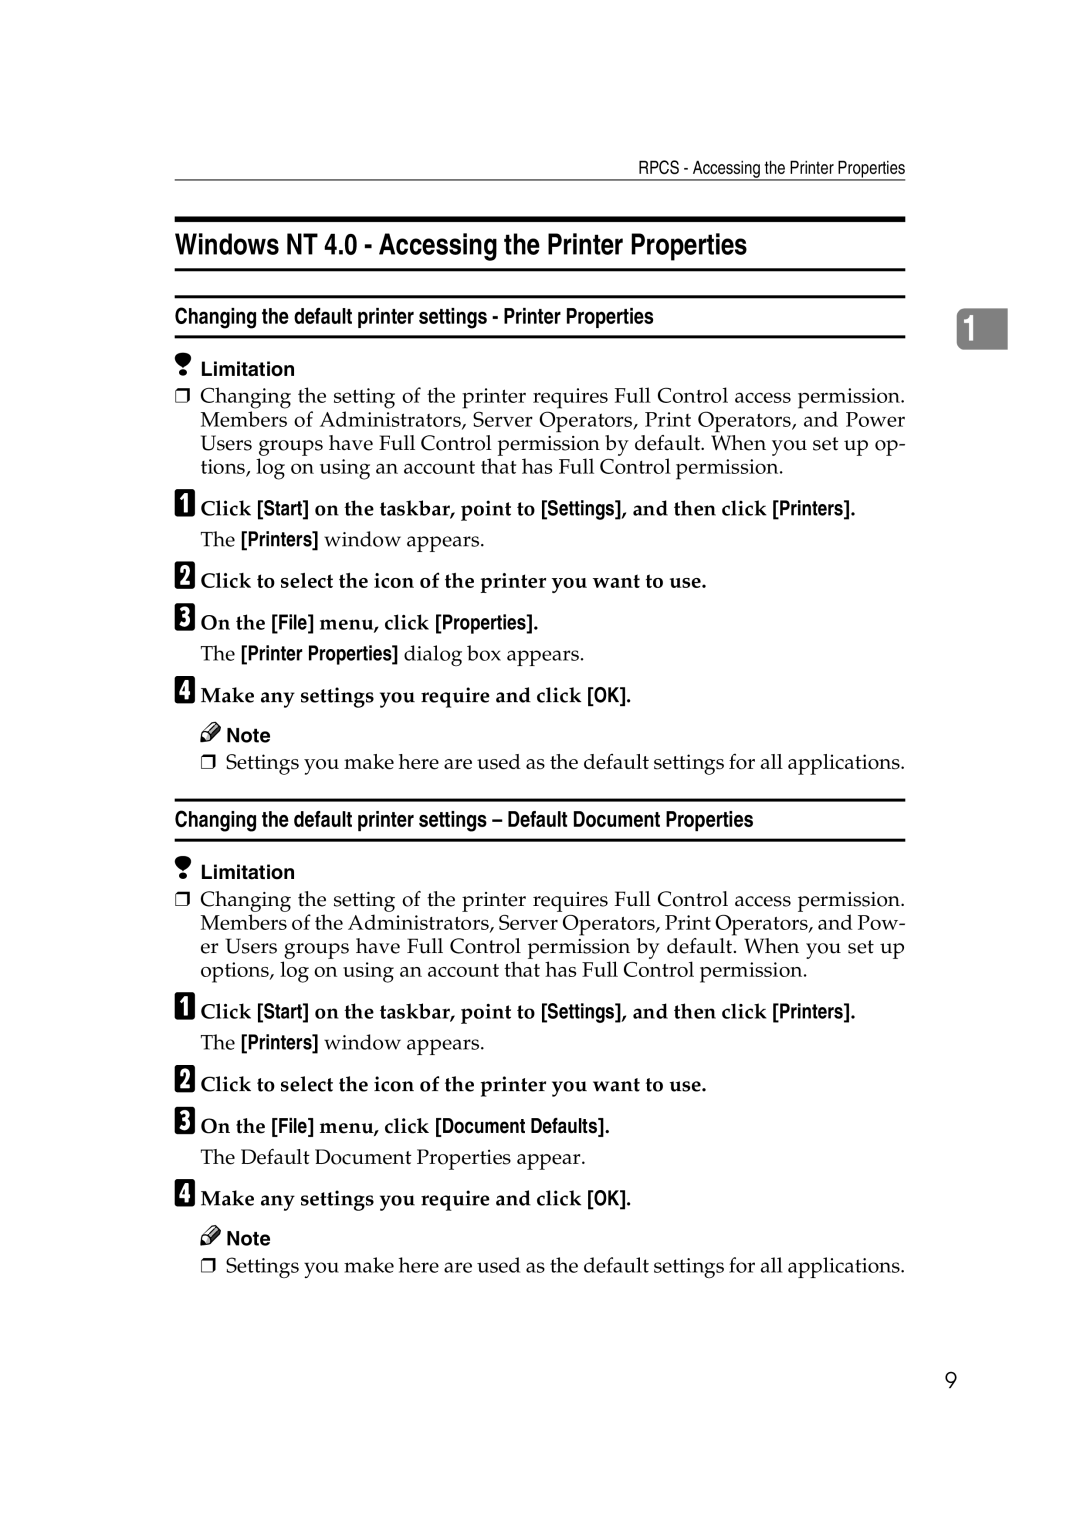 Lanier AP2610 manual Windows NT 4.0 Accessing the Printer Properties 